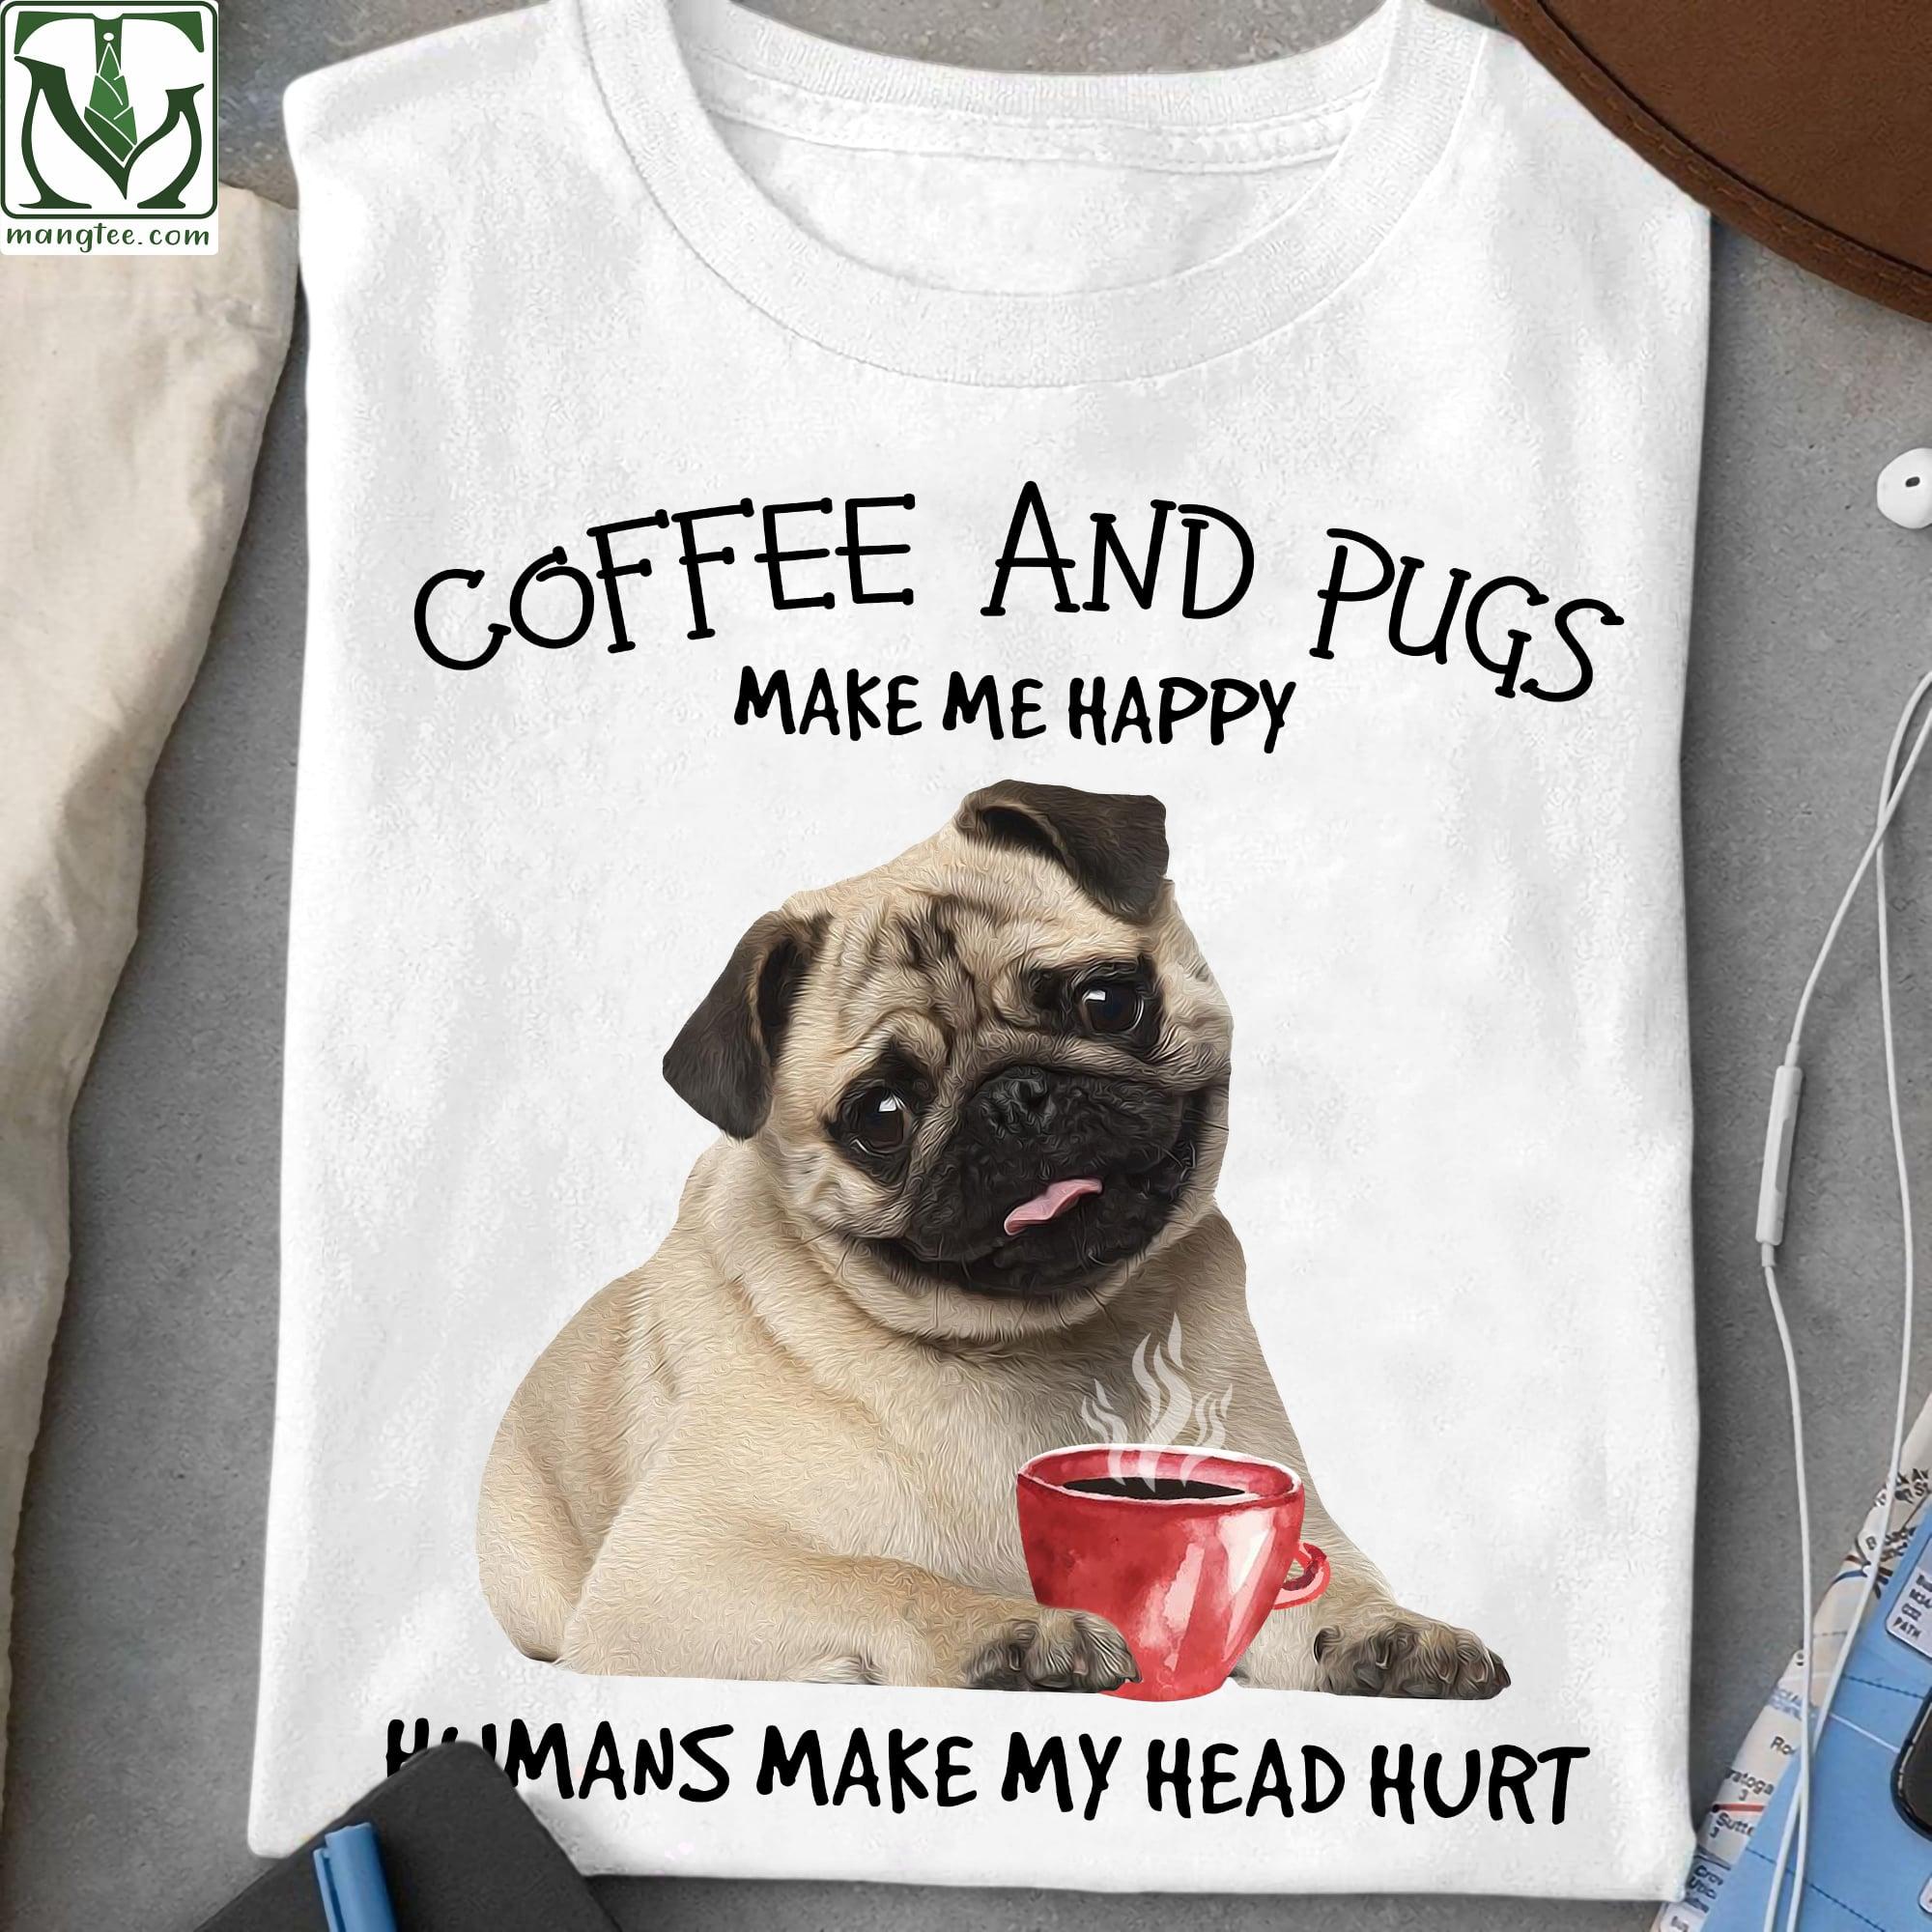 Coffee and pugs make me happy, humans make my head hurt - Gorgeous pug dog